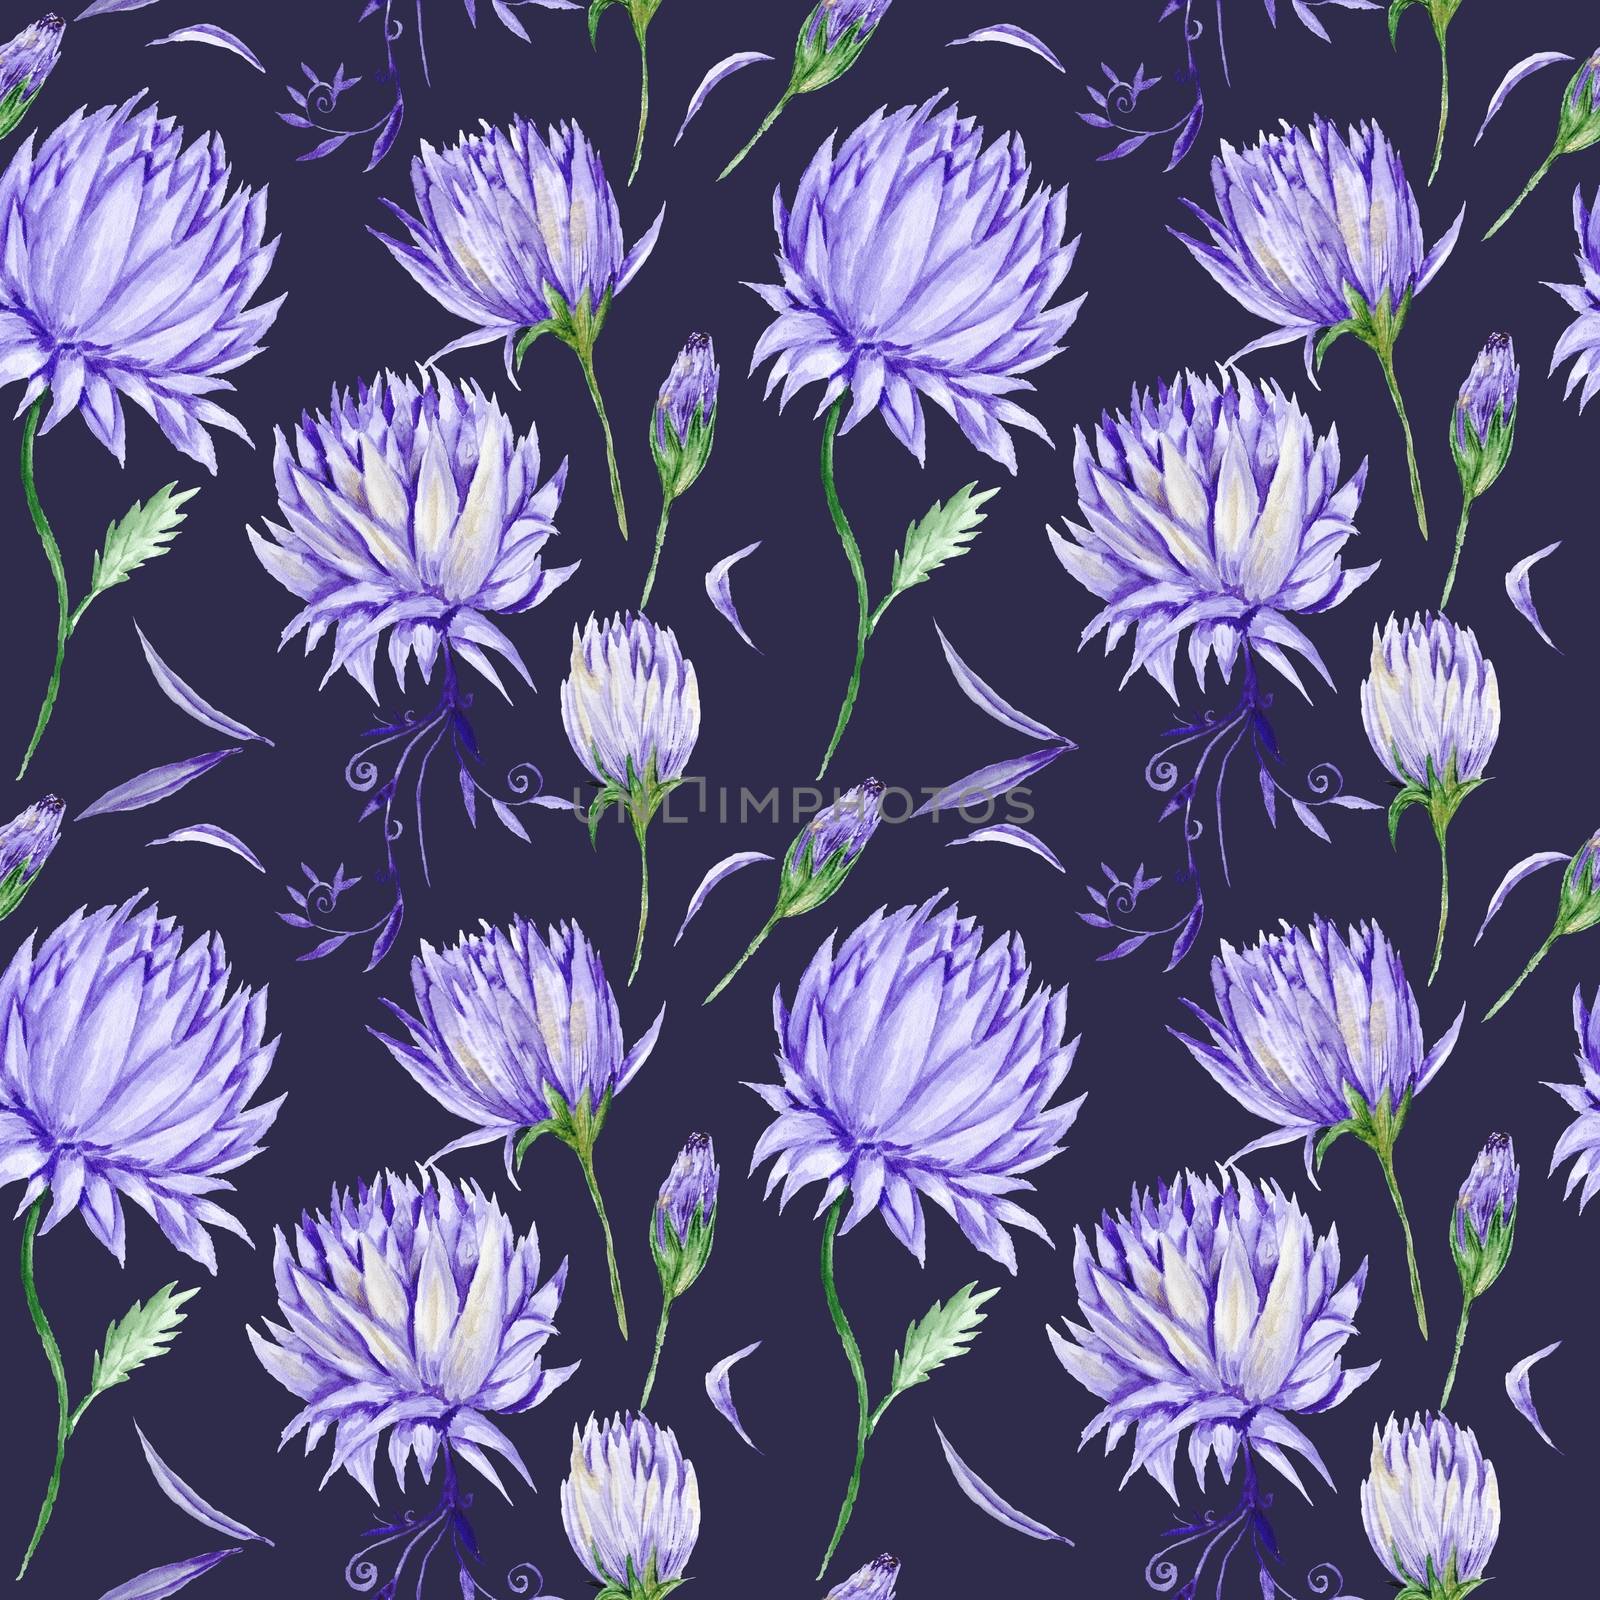 Dark Romantic Pattern with Purple Flowers by kisika